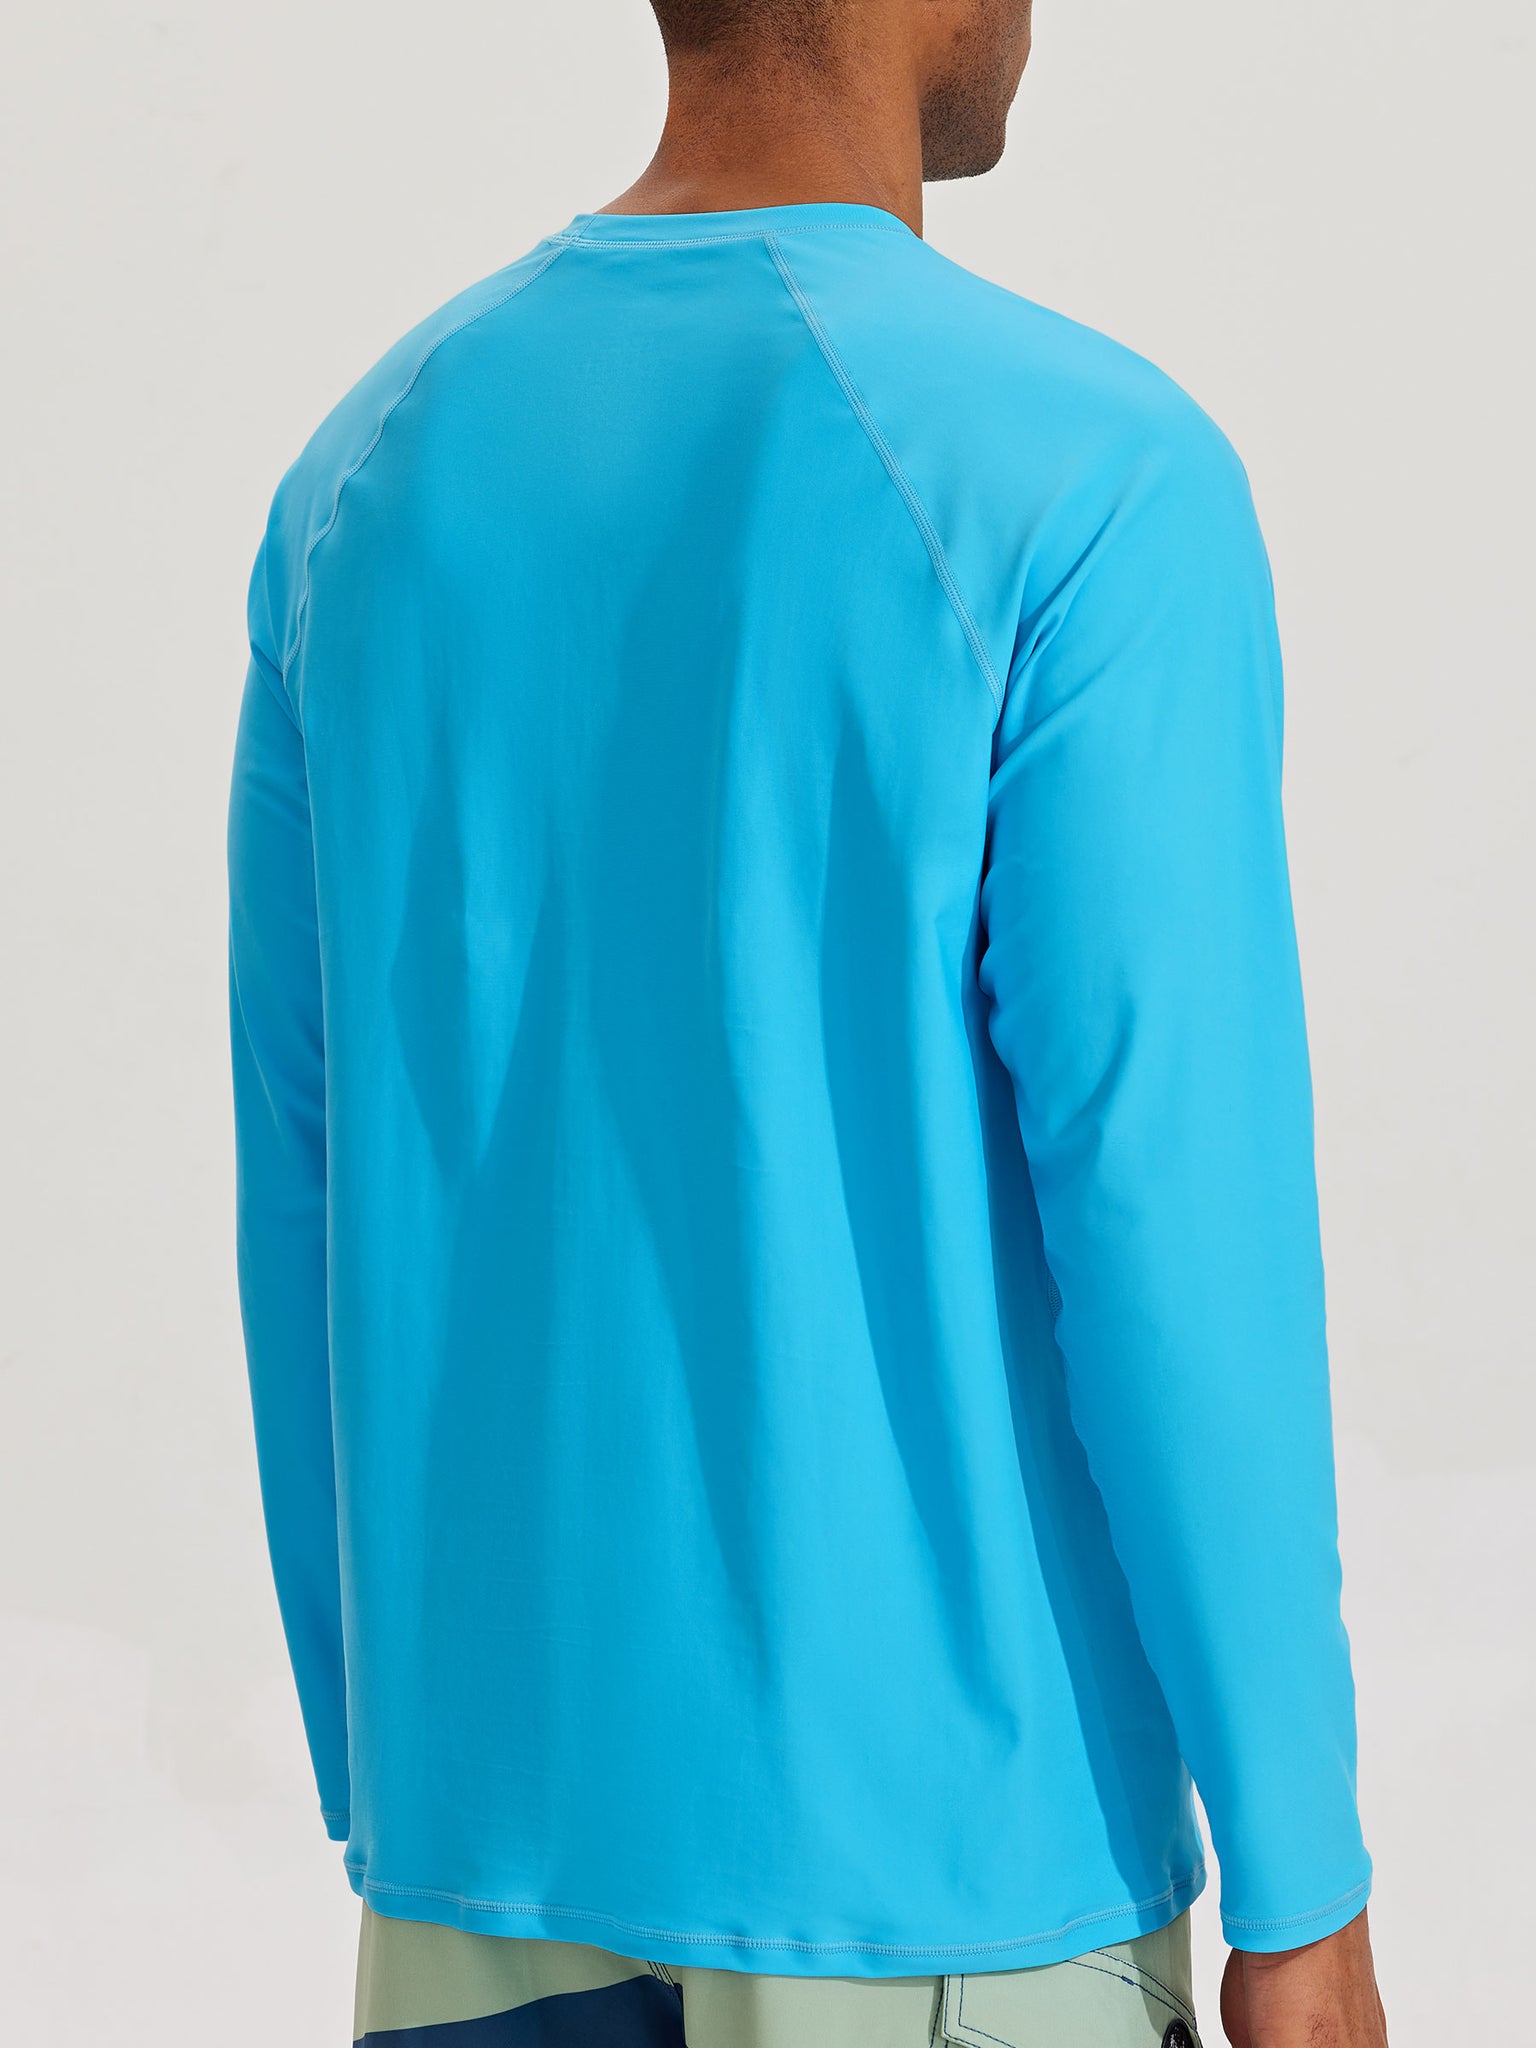 Men's Sun Protection Long Sleeve Shirt_Blue_model3